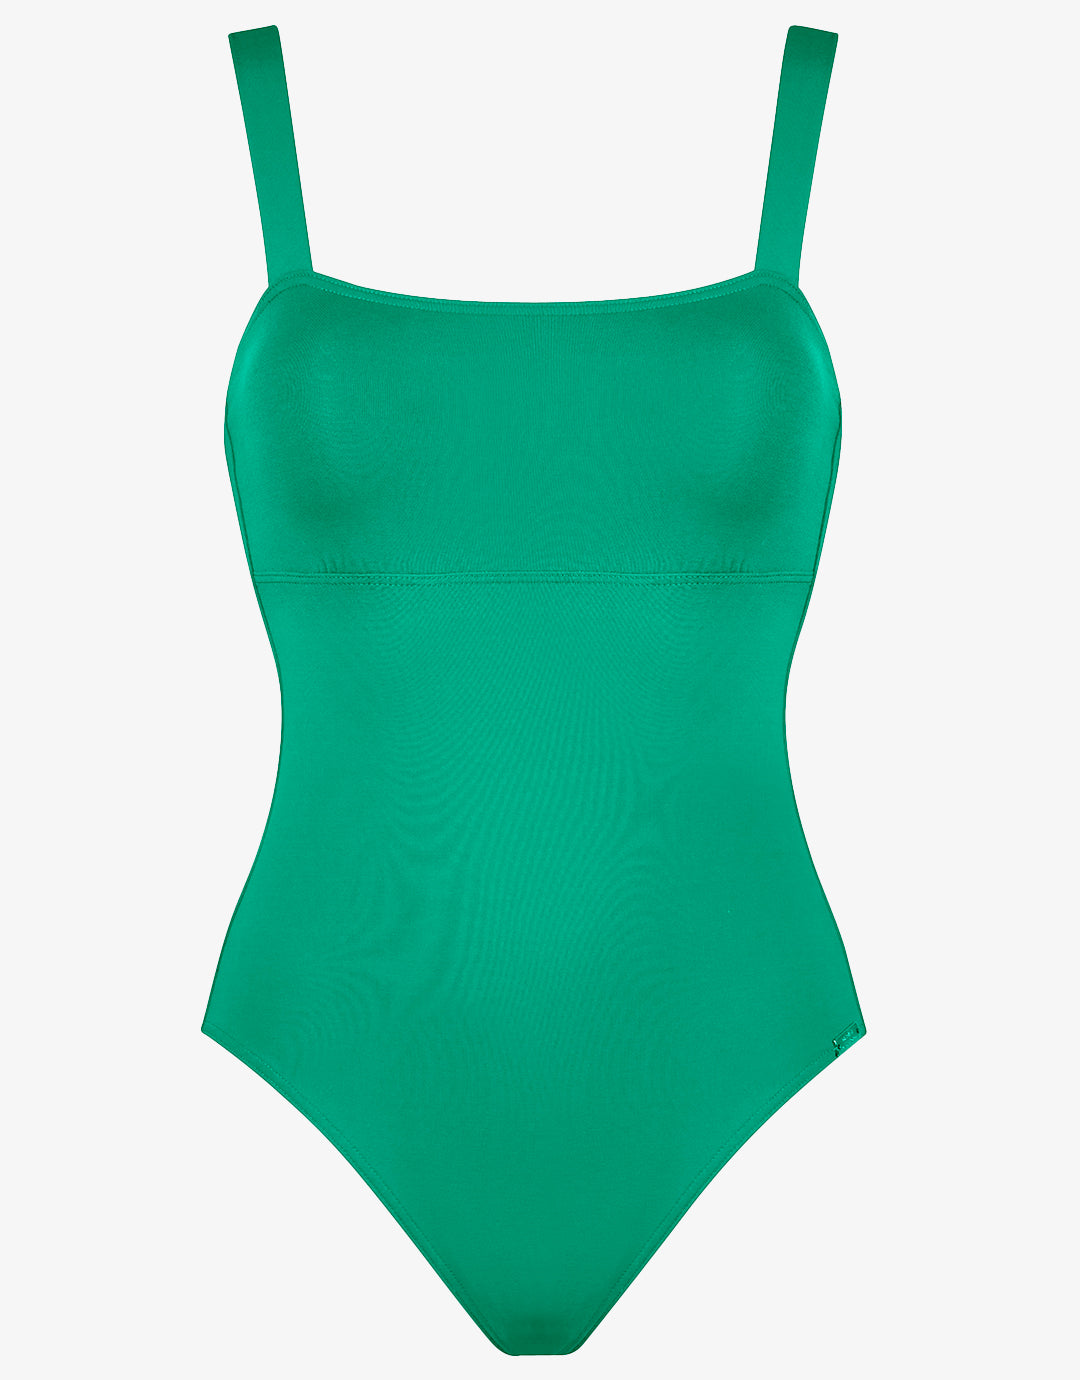 Softline Square-shaped Swimsuit - Verdant - Simply Beach UK